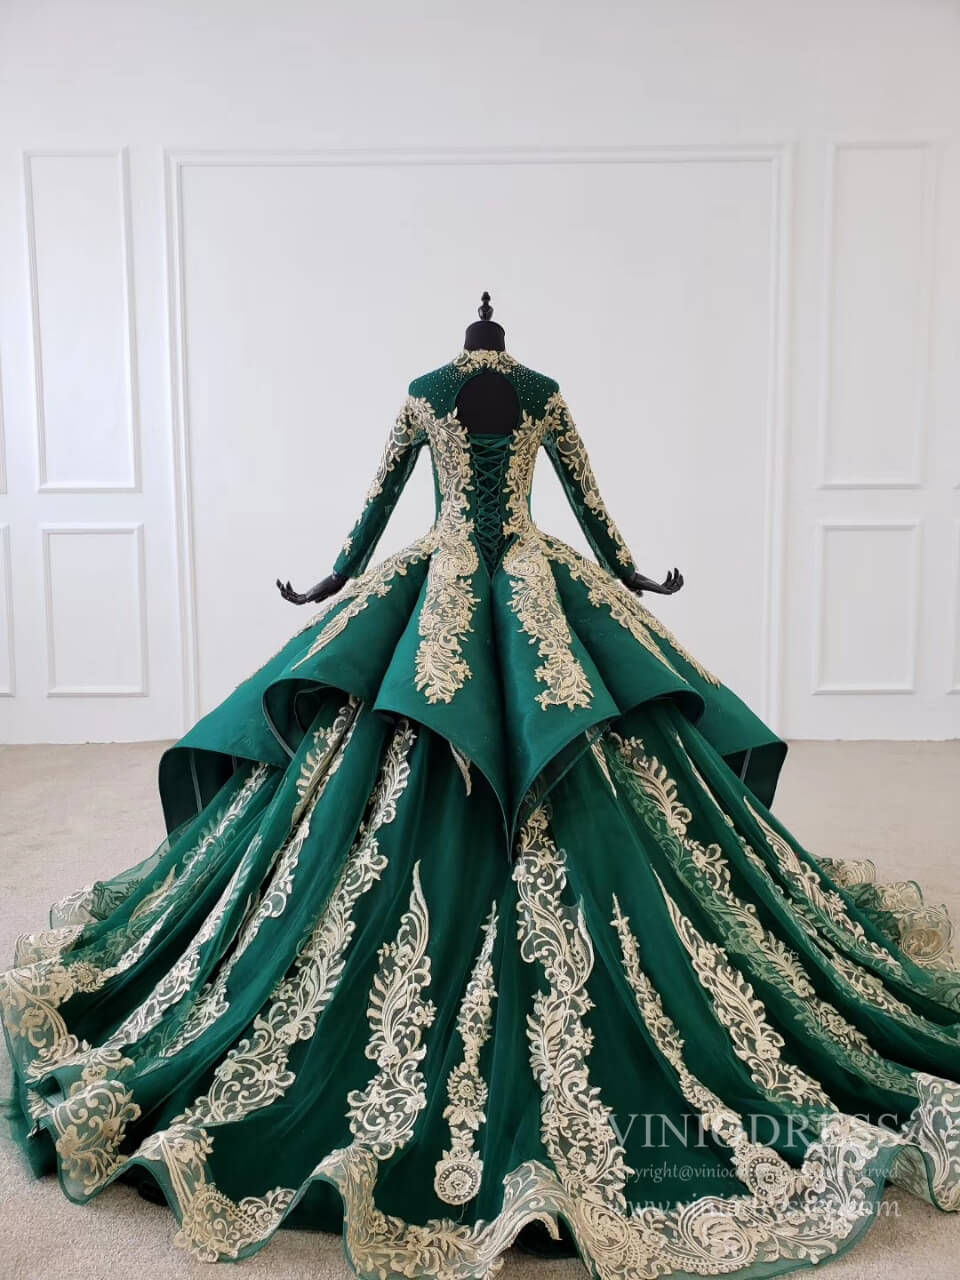 Emerald Green Wedding Dresses Muslim Formal Dress FD2150-prom dresses-Viniodress-Viniodress